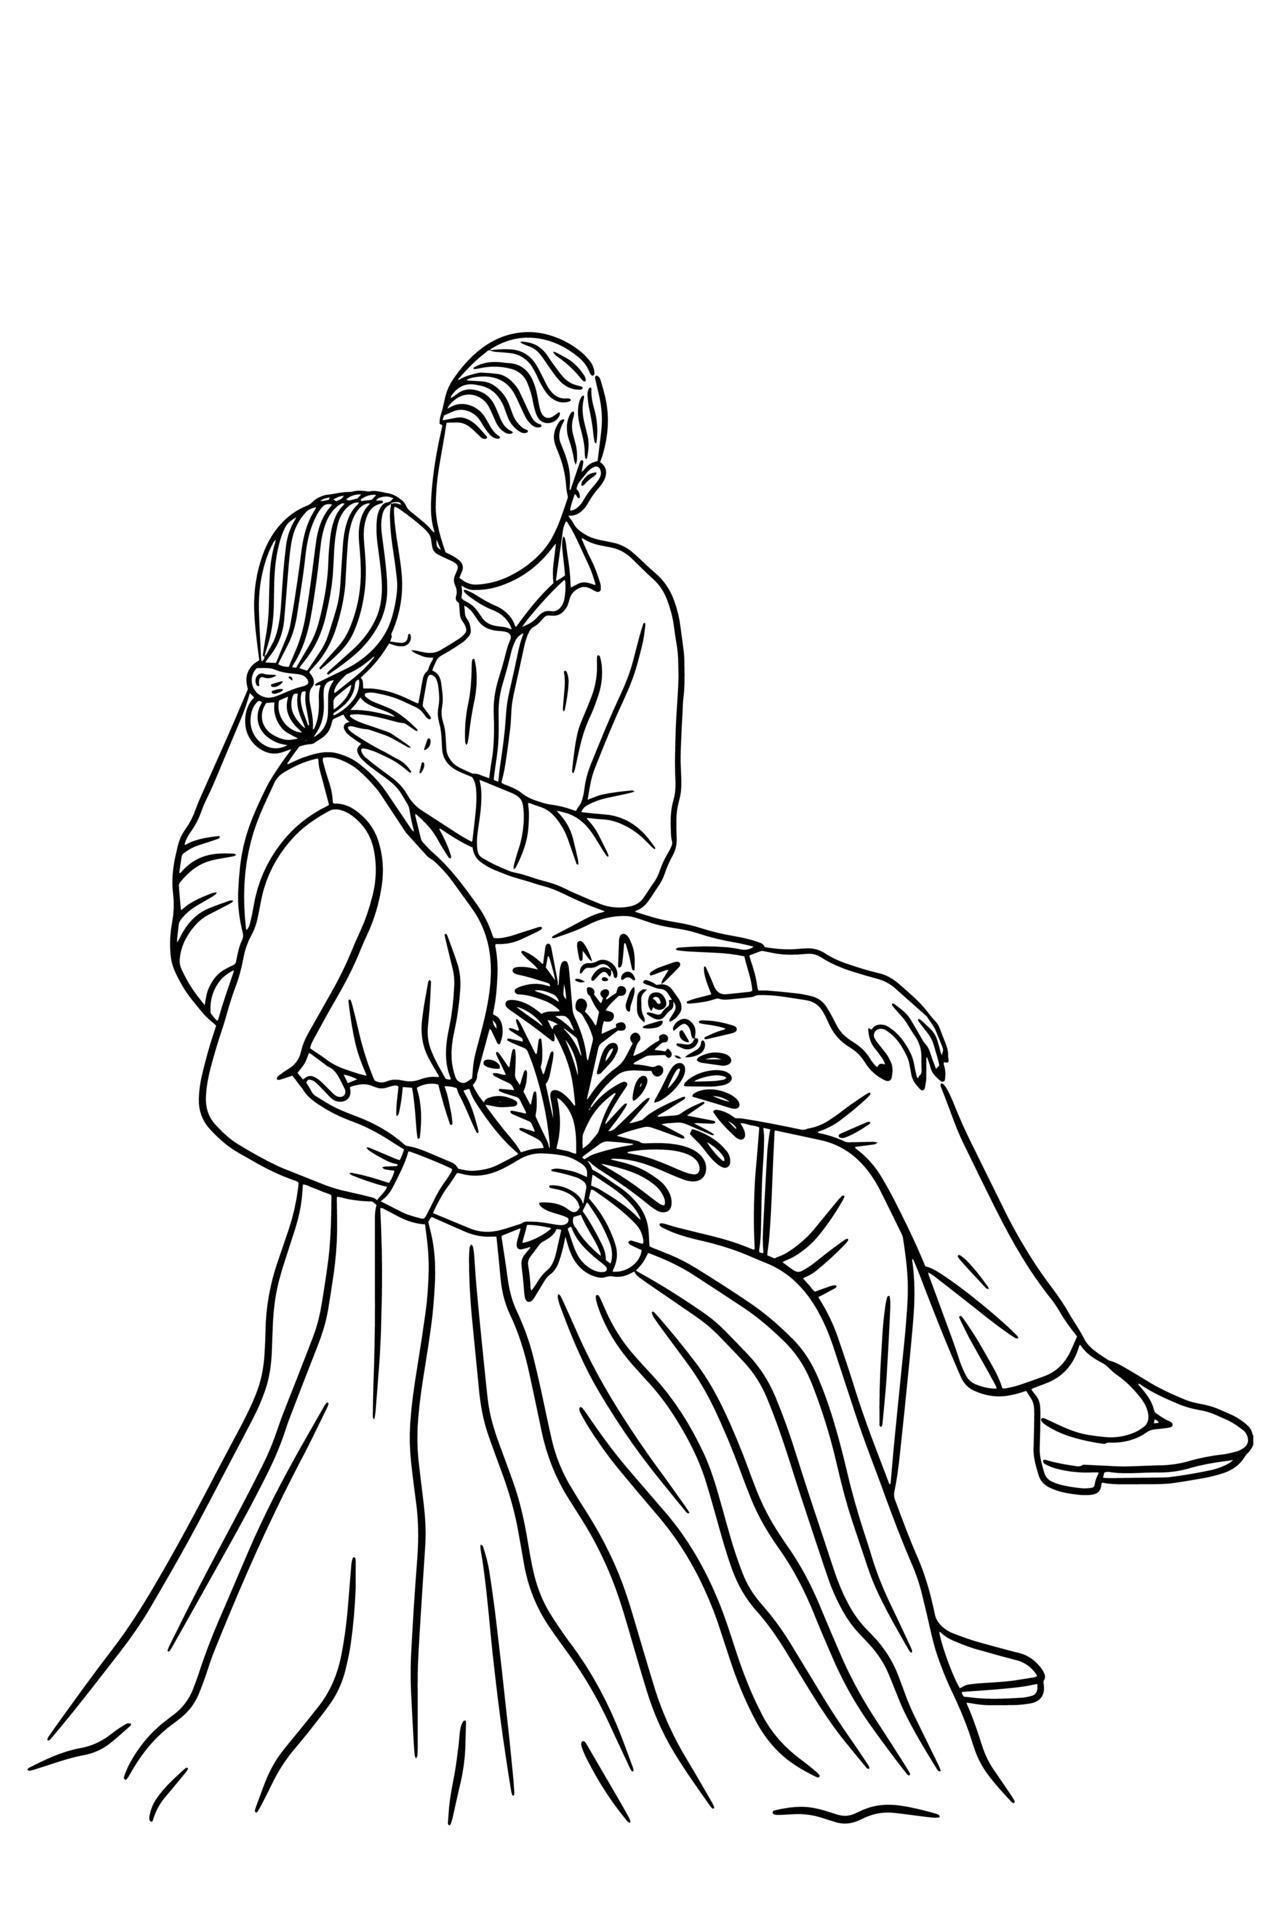 Couple Happy Wedding Women Men Wife Husband Line Art illustration ...